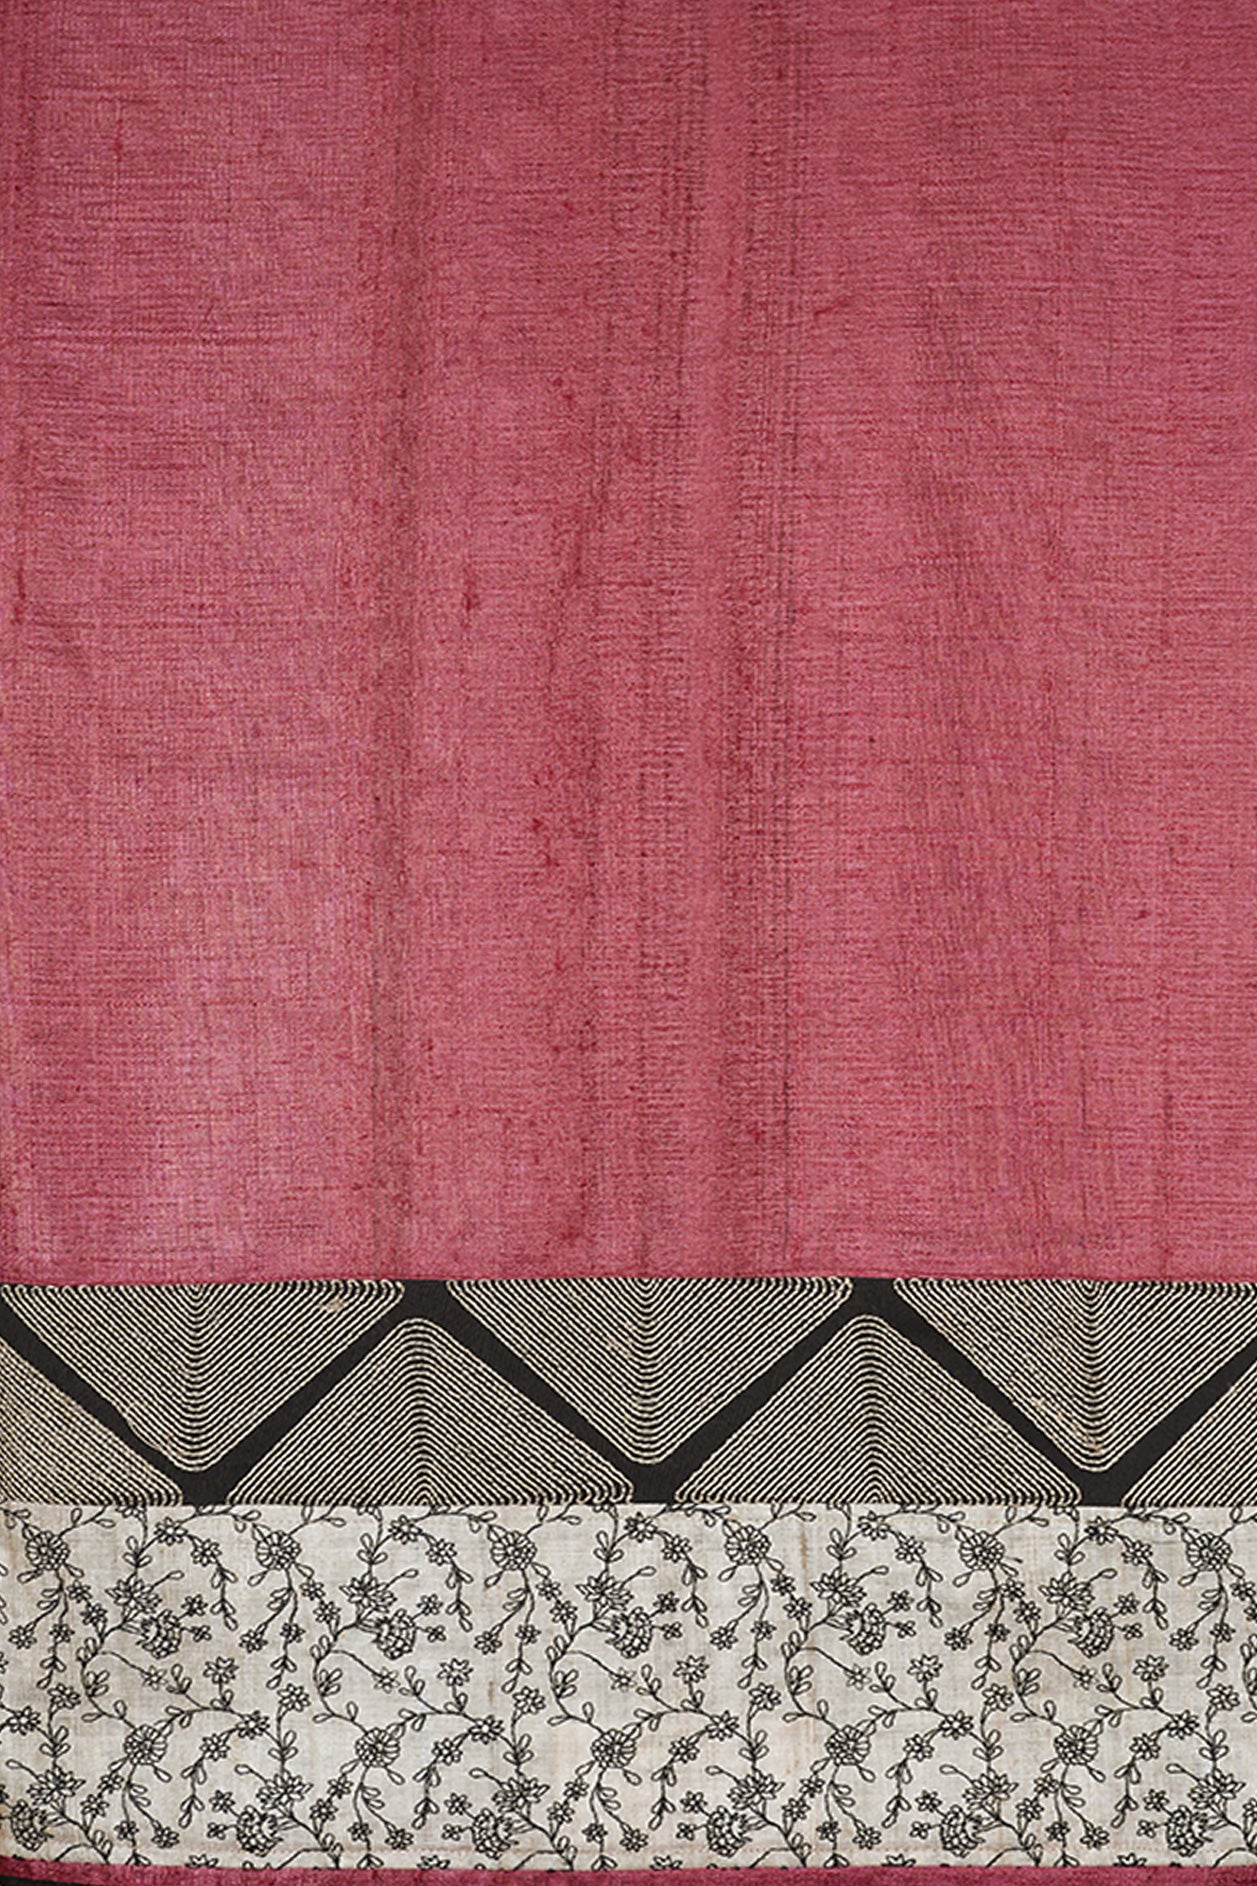 Embroidered Floral Design Border Plain Burgundy Tussar Silk Saree